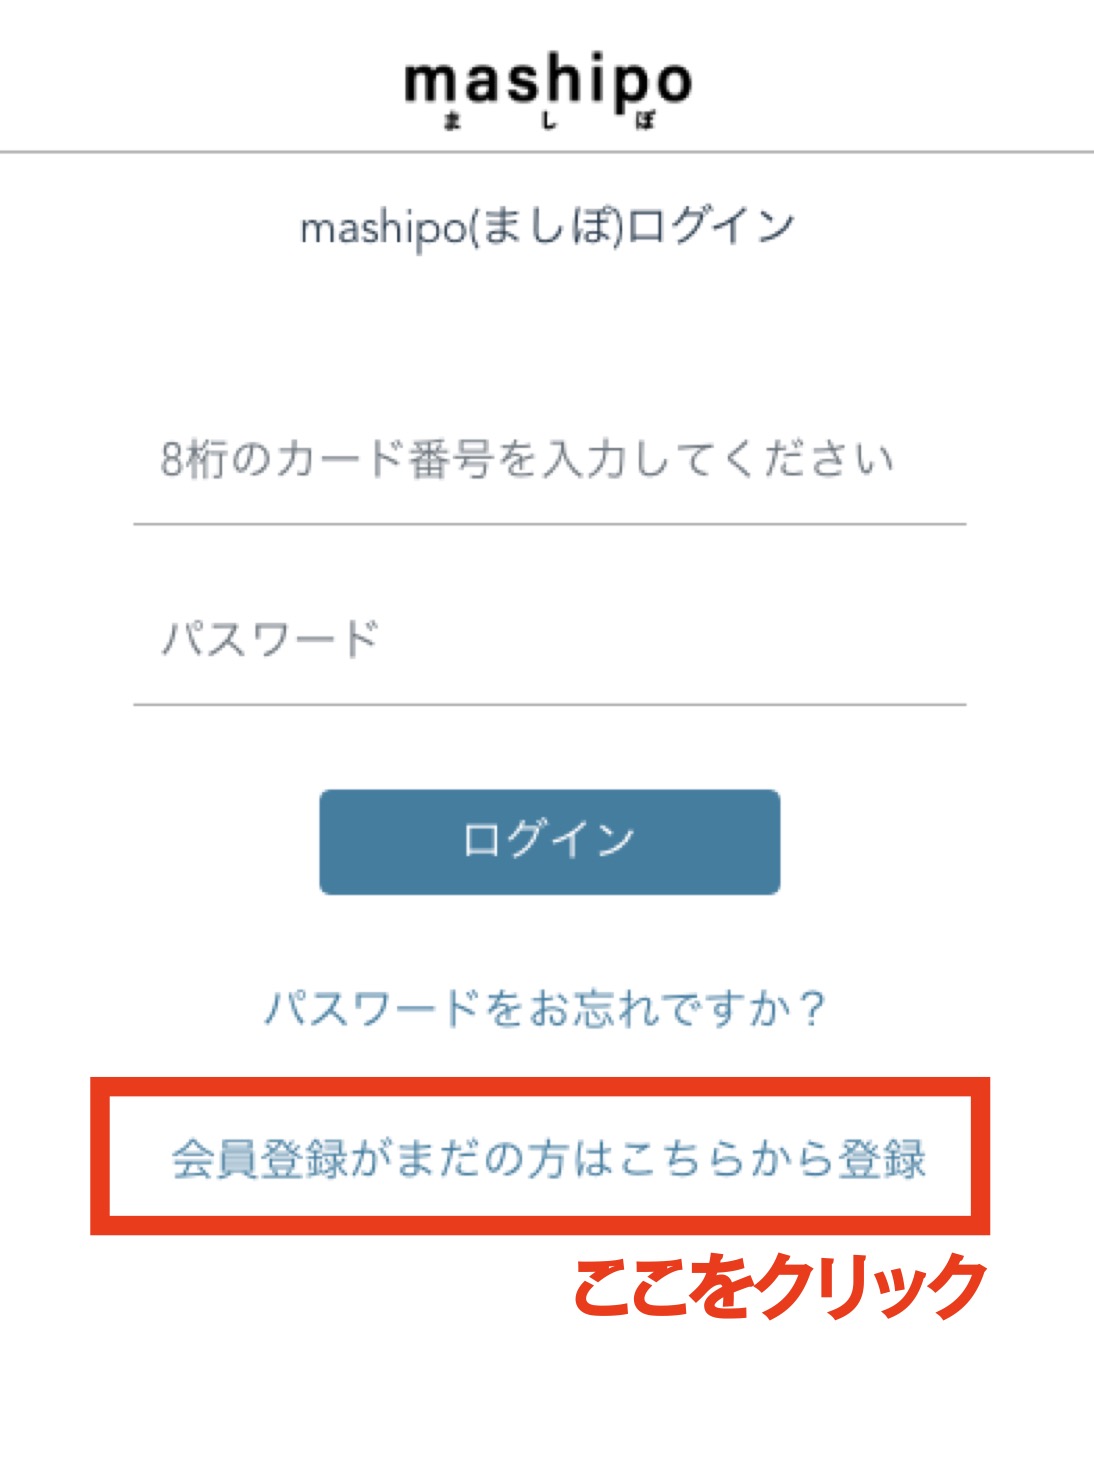 mashipo会員情報Web登録トップ画面